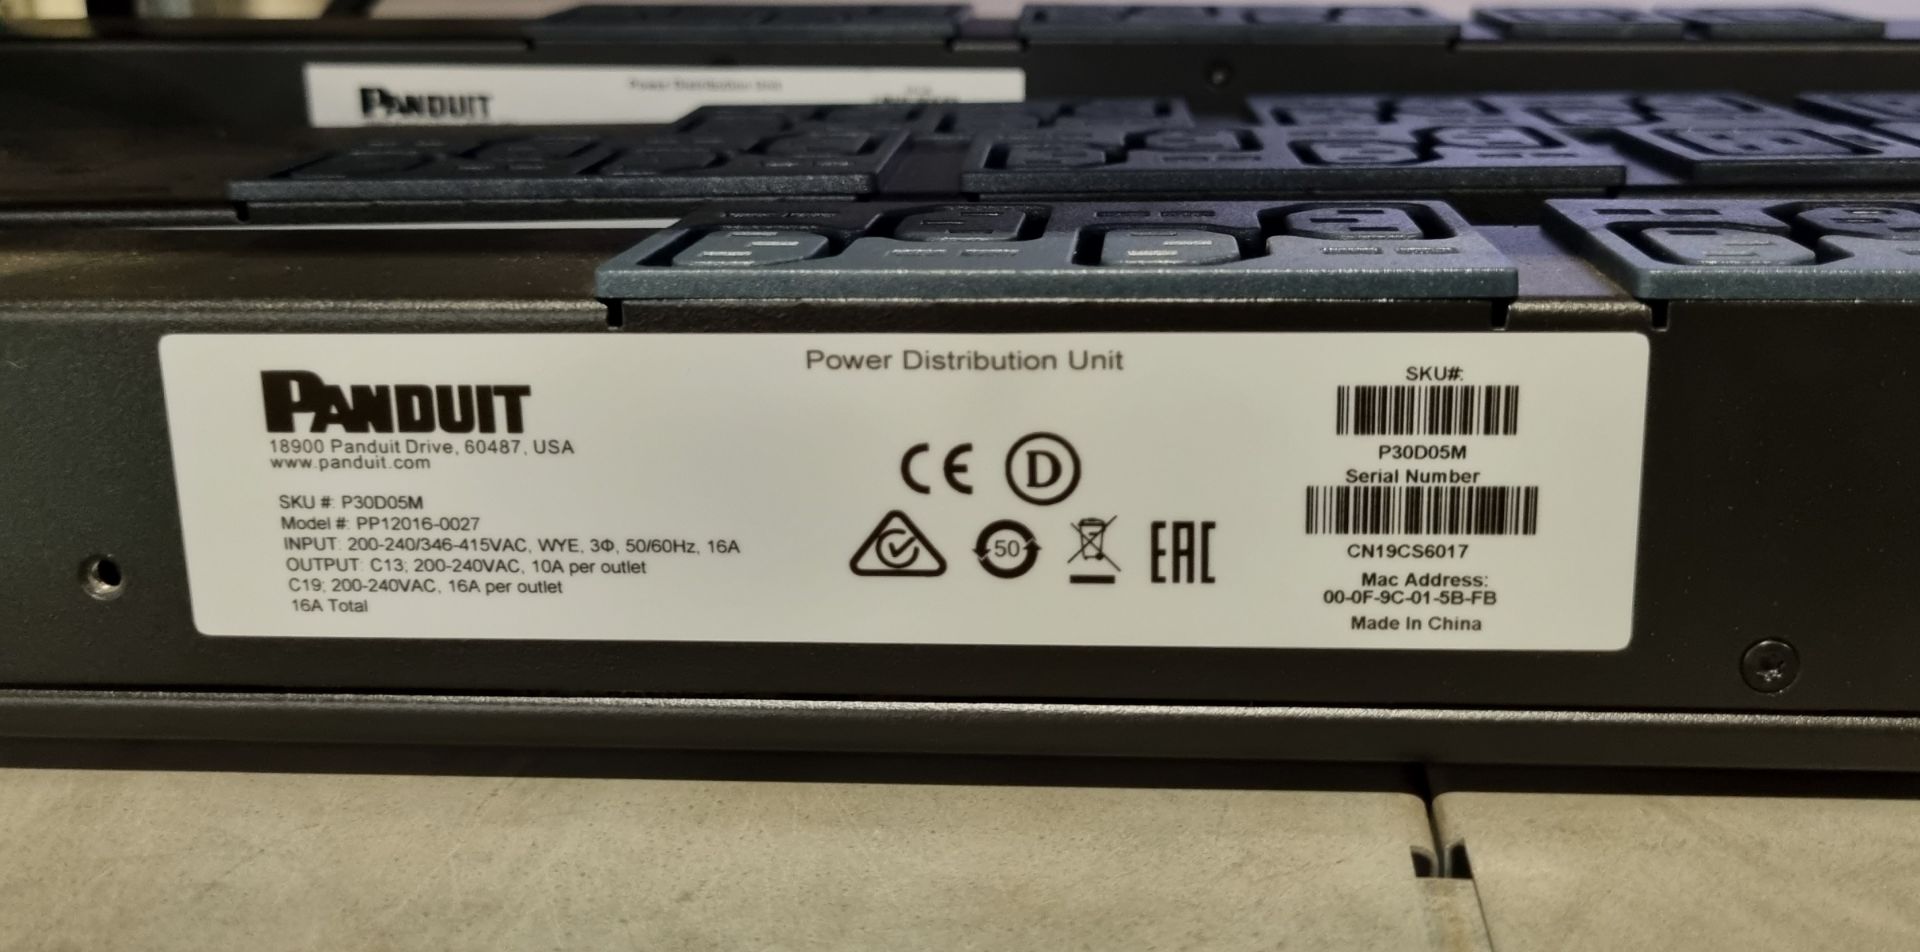 4x Panduit PP12016-0027 power distribution units - 16A, 24x C13, 6x C19 sockets - L 1530 x W50 - Image 5 of 5